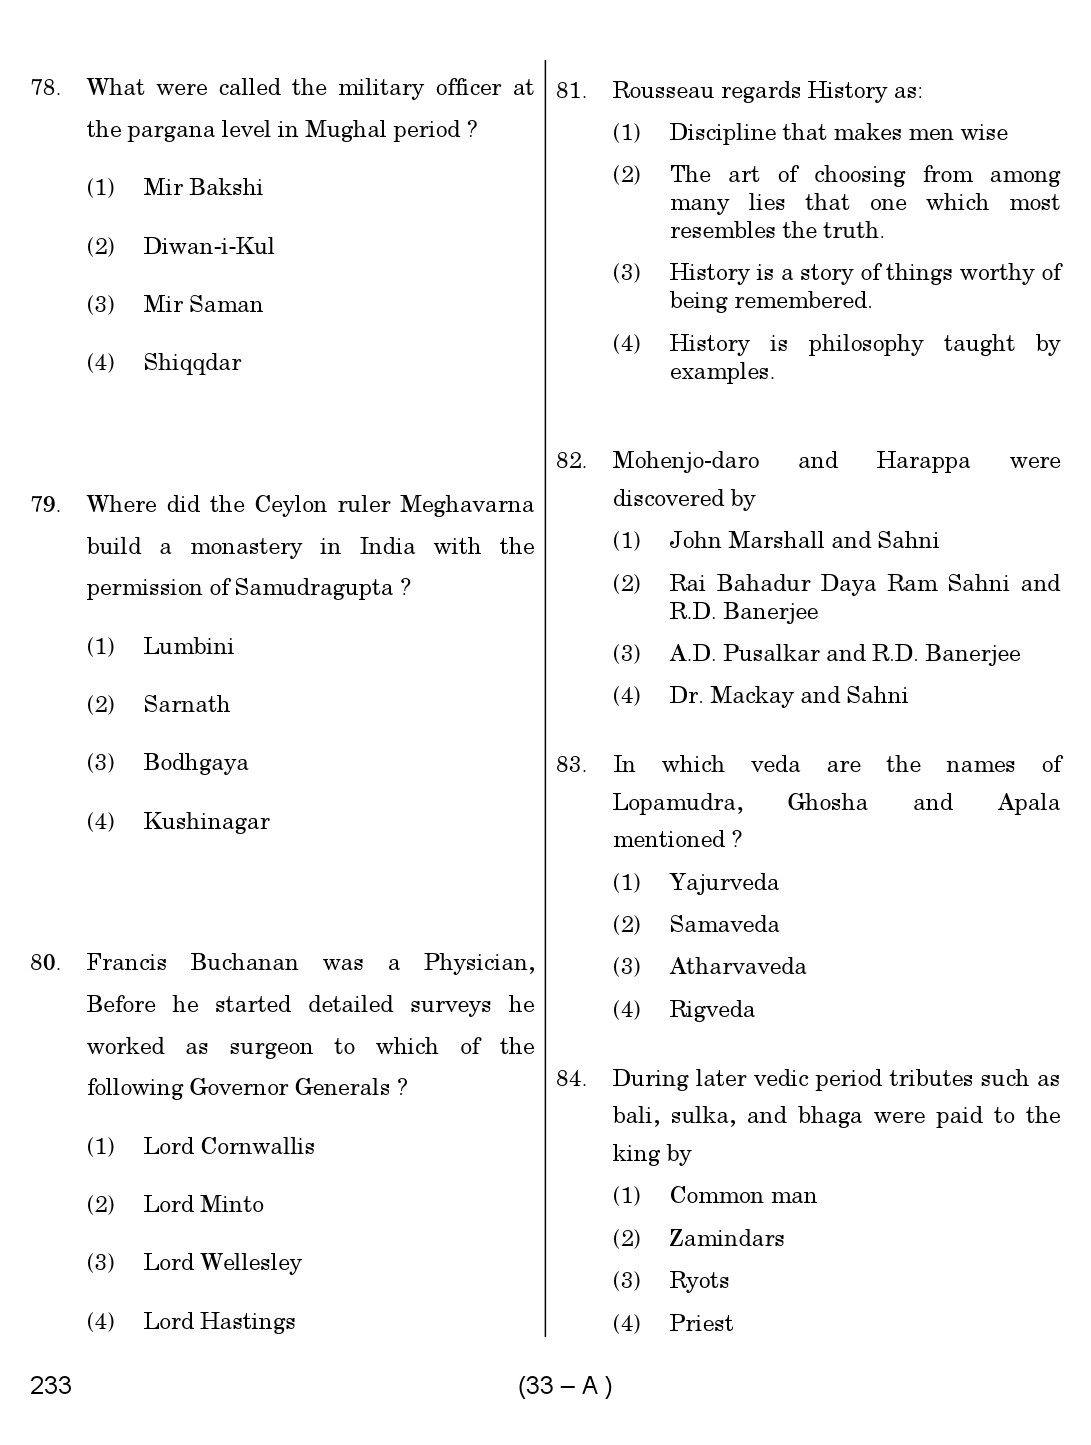 Karnataka PSC History Teacher Exam Sample Question Paper Subject code 233 33